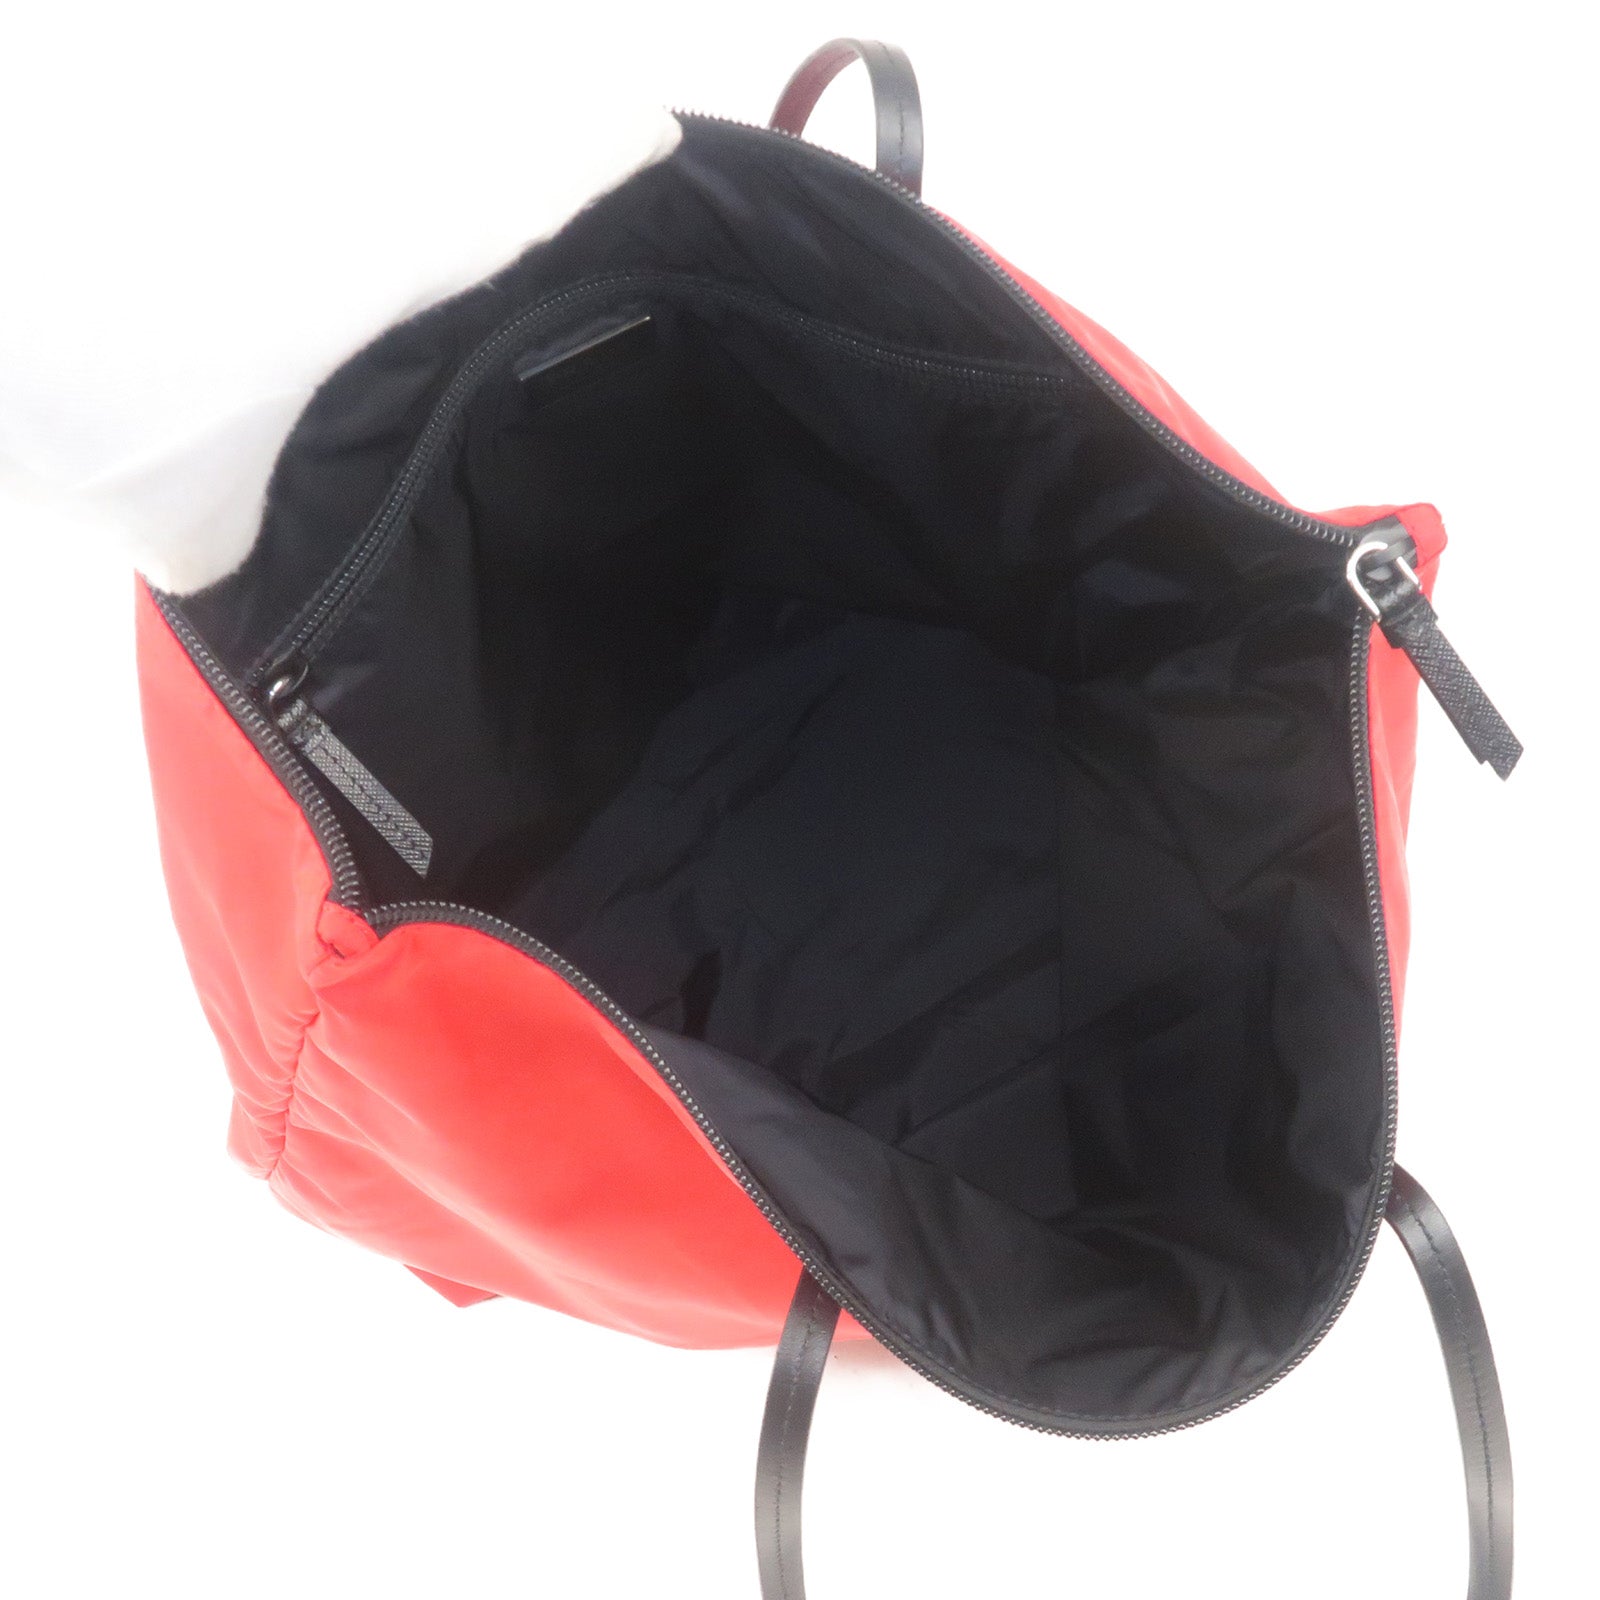 PRADA-Nylon-Leather-Tote-Bag-Red-NERO-Black-1BY300 – dct